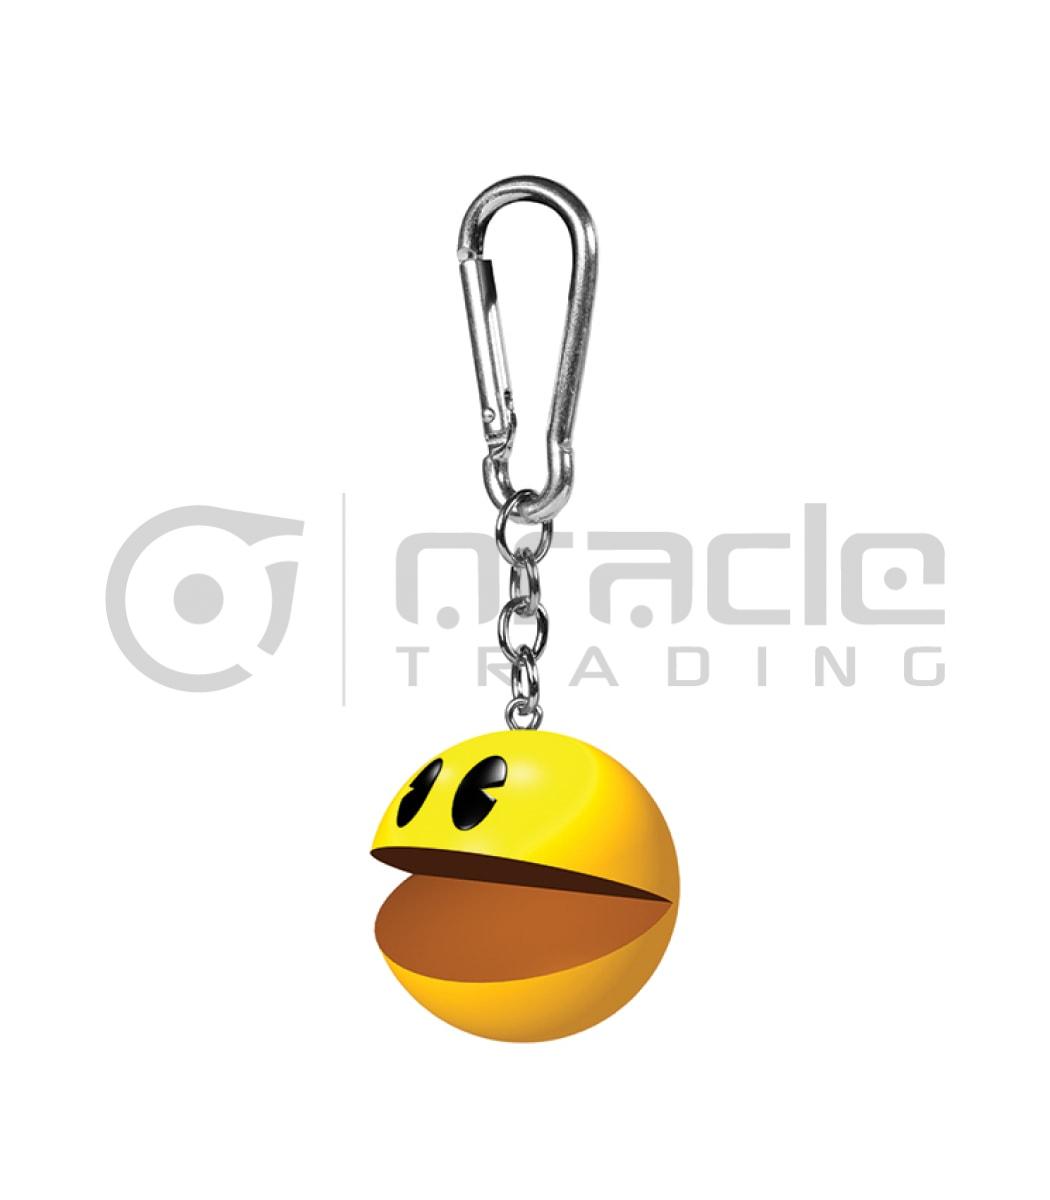 Pacman 3D Keychain